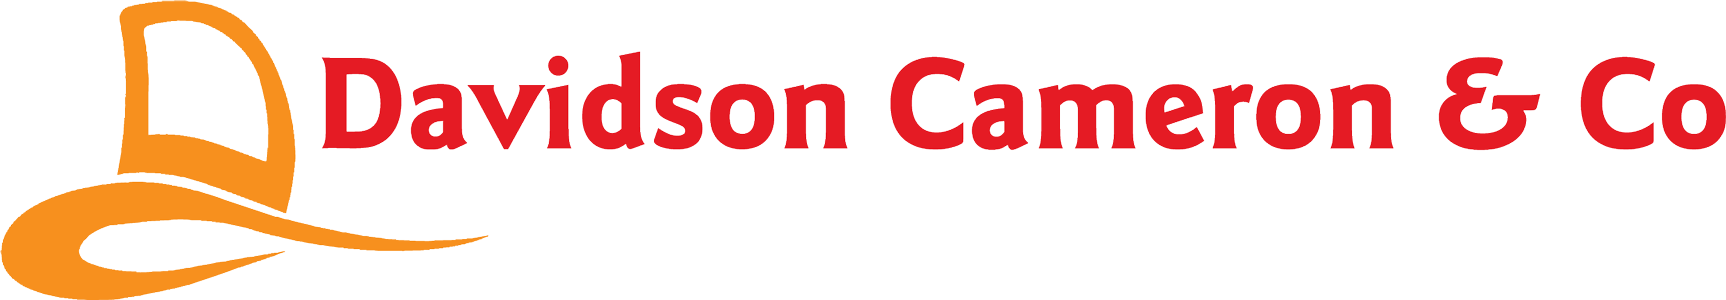 Davidson Cameron and Co